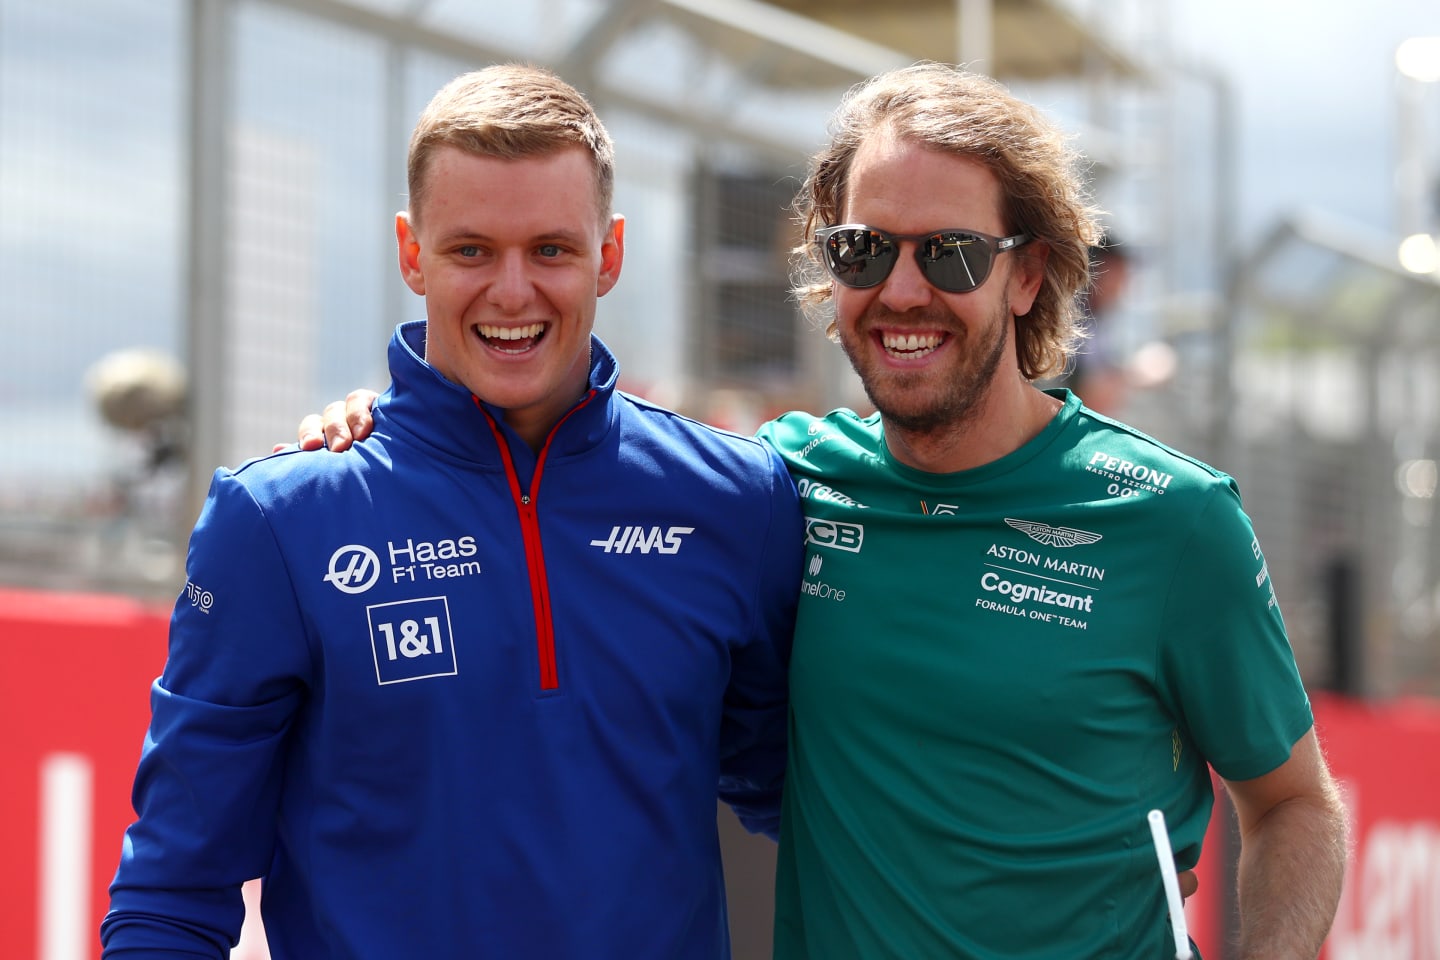 NORTHAMPTON, ENGLAND - JULY 03: Sebastian Vettel of Germany and Aston Martin F1 Team and Mick